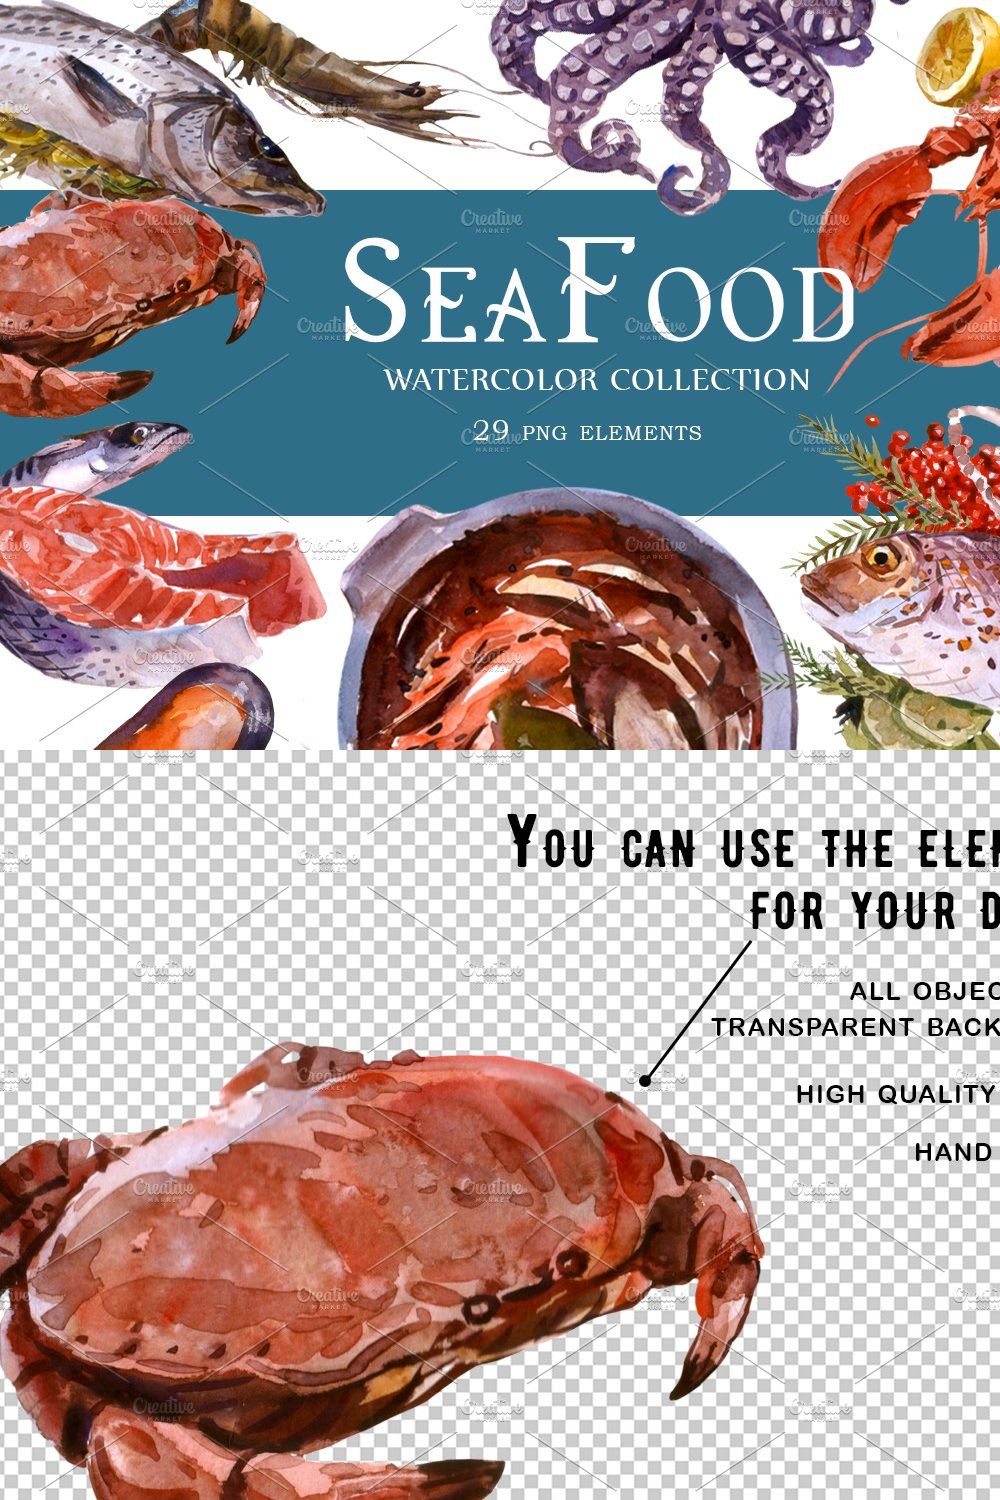 Sea Food Watercolor set pinterest preview image.